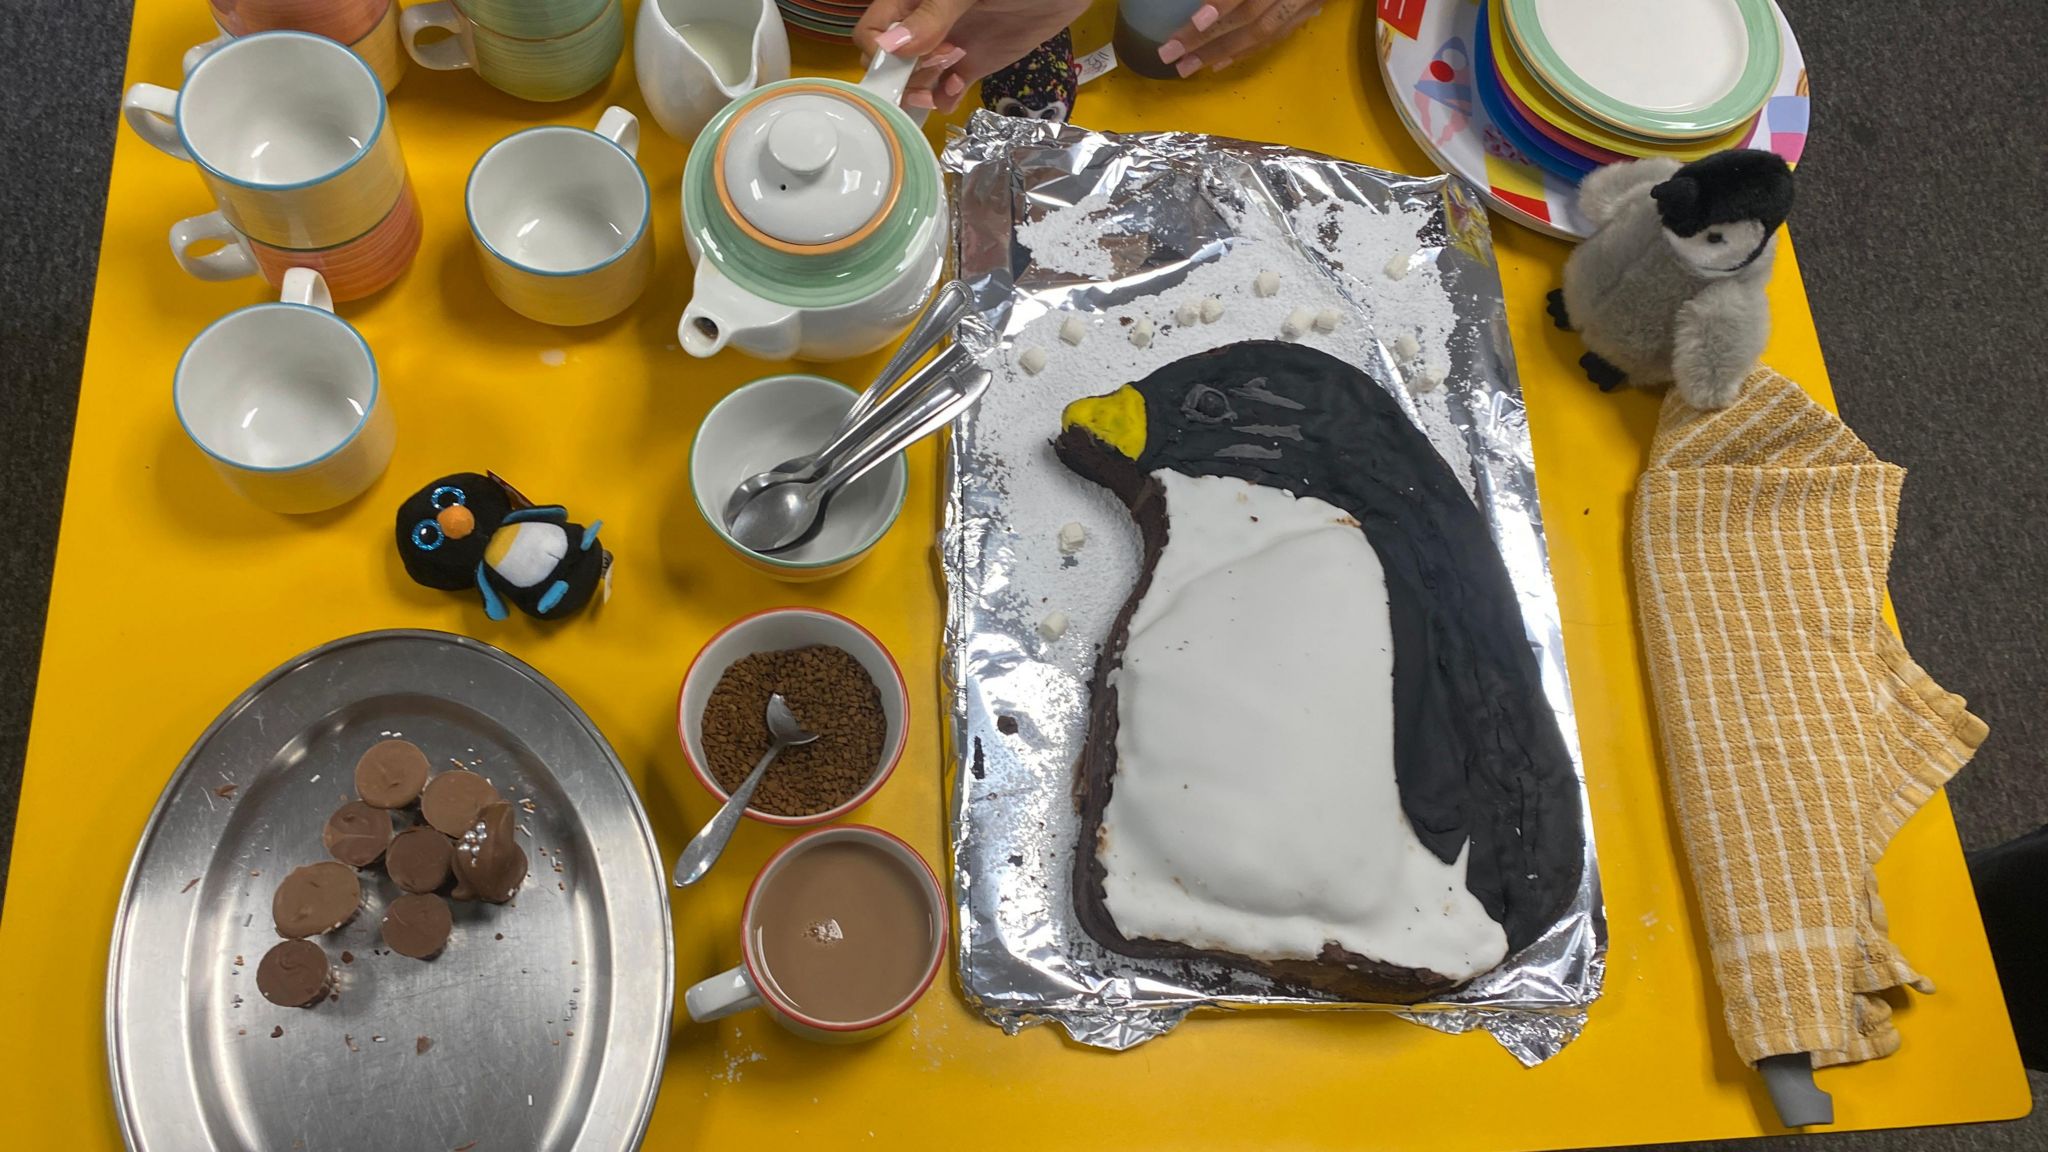 A penguin cake